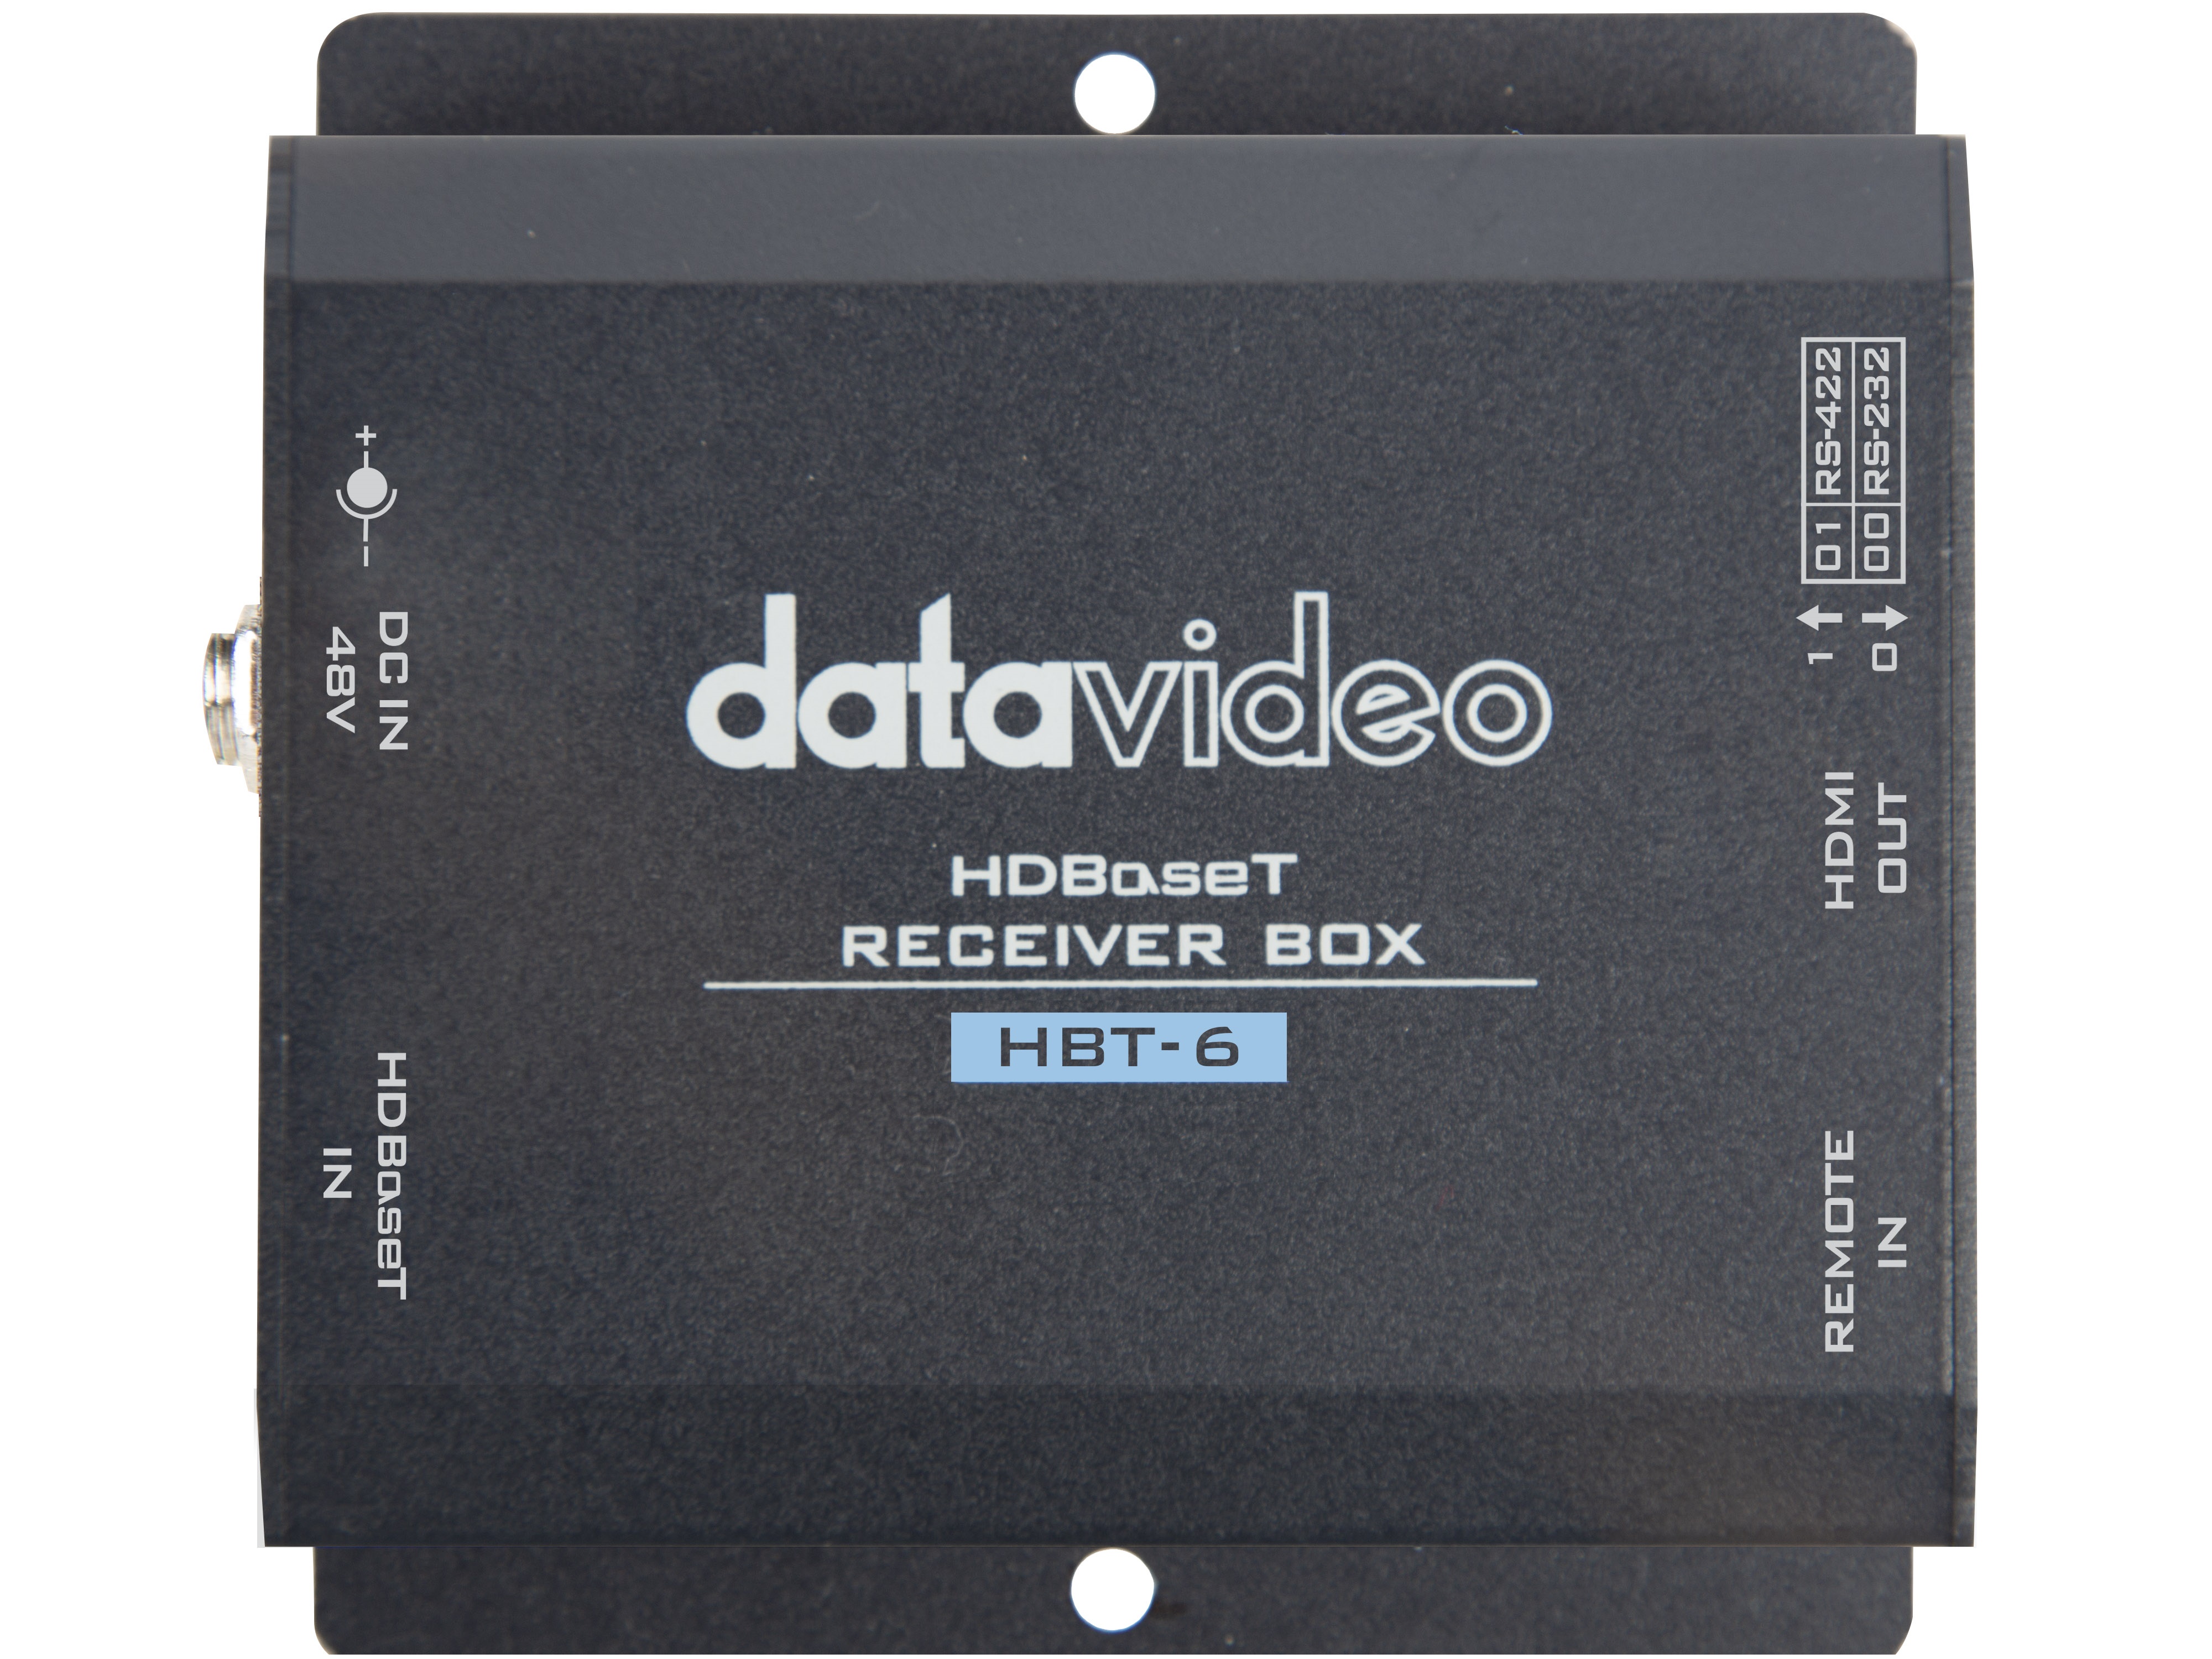 HBT-6 HDBaseT Receiver Box by Datavideo